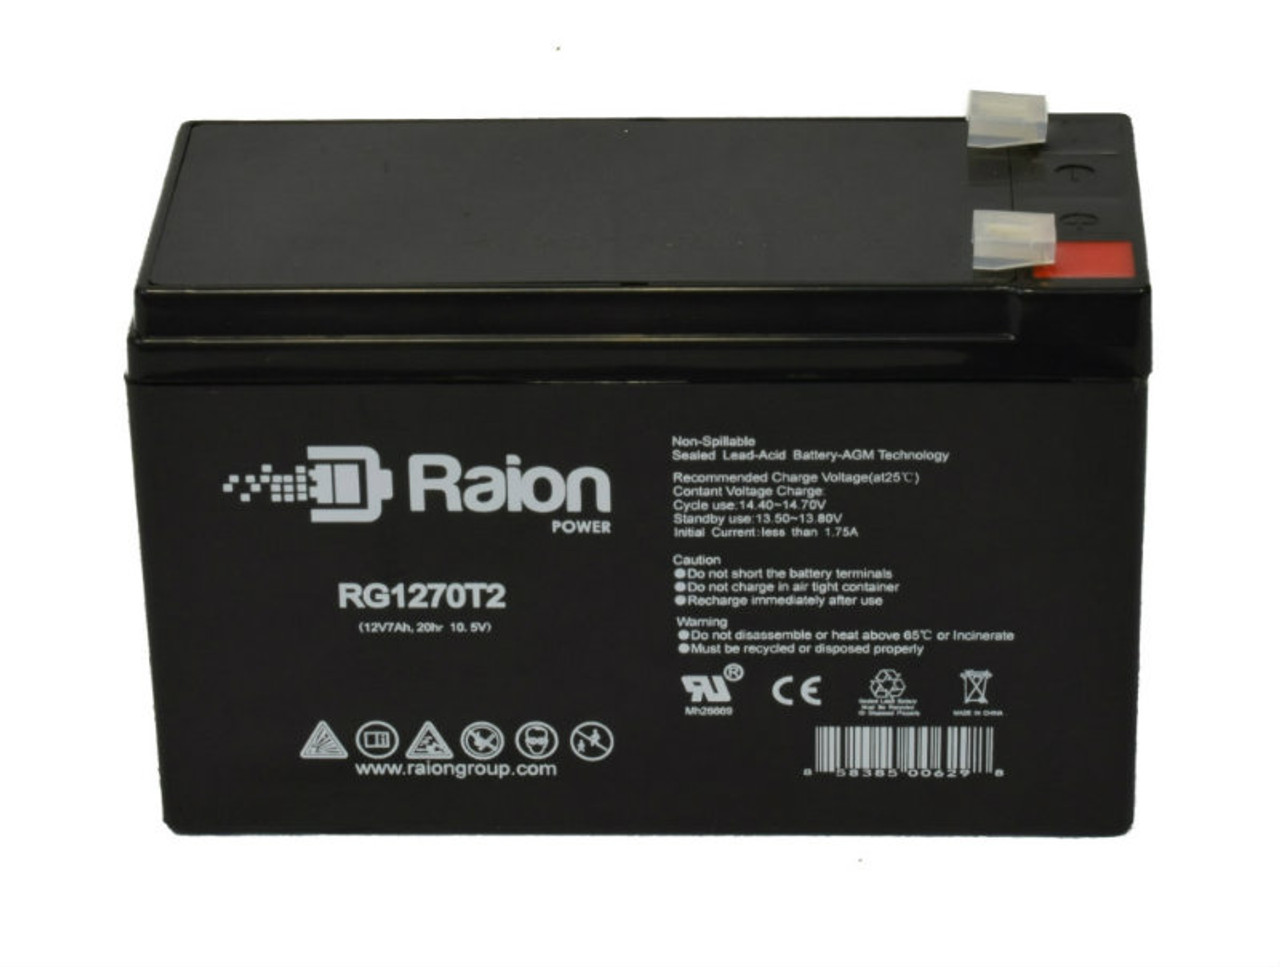 Raion Power RG1270T2 12V 7Ah Lead Acid Battery for Unikor MxVolta VT1207